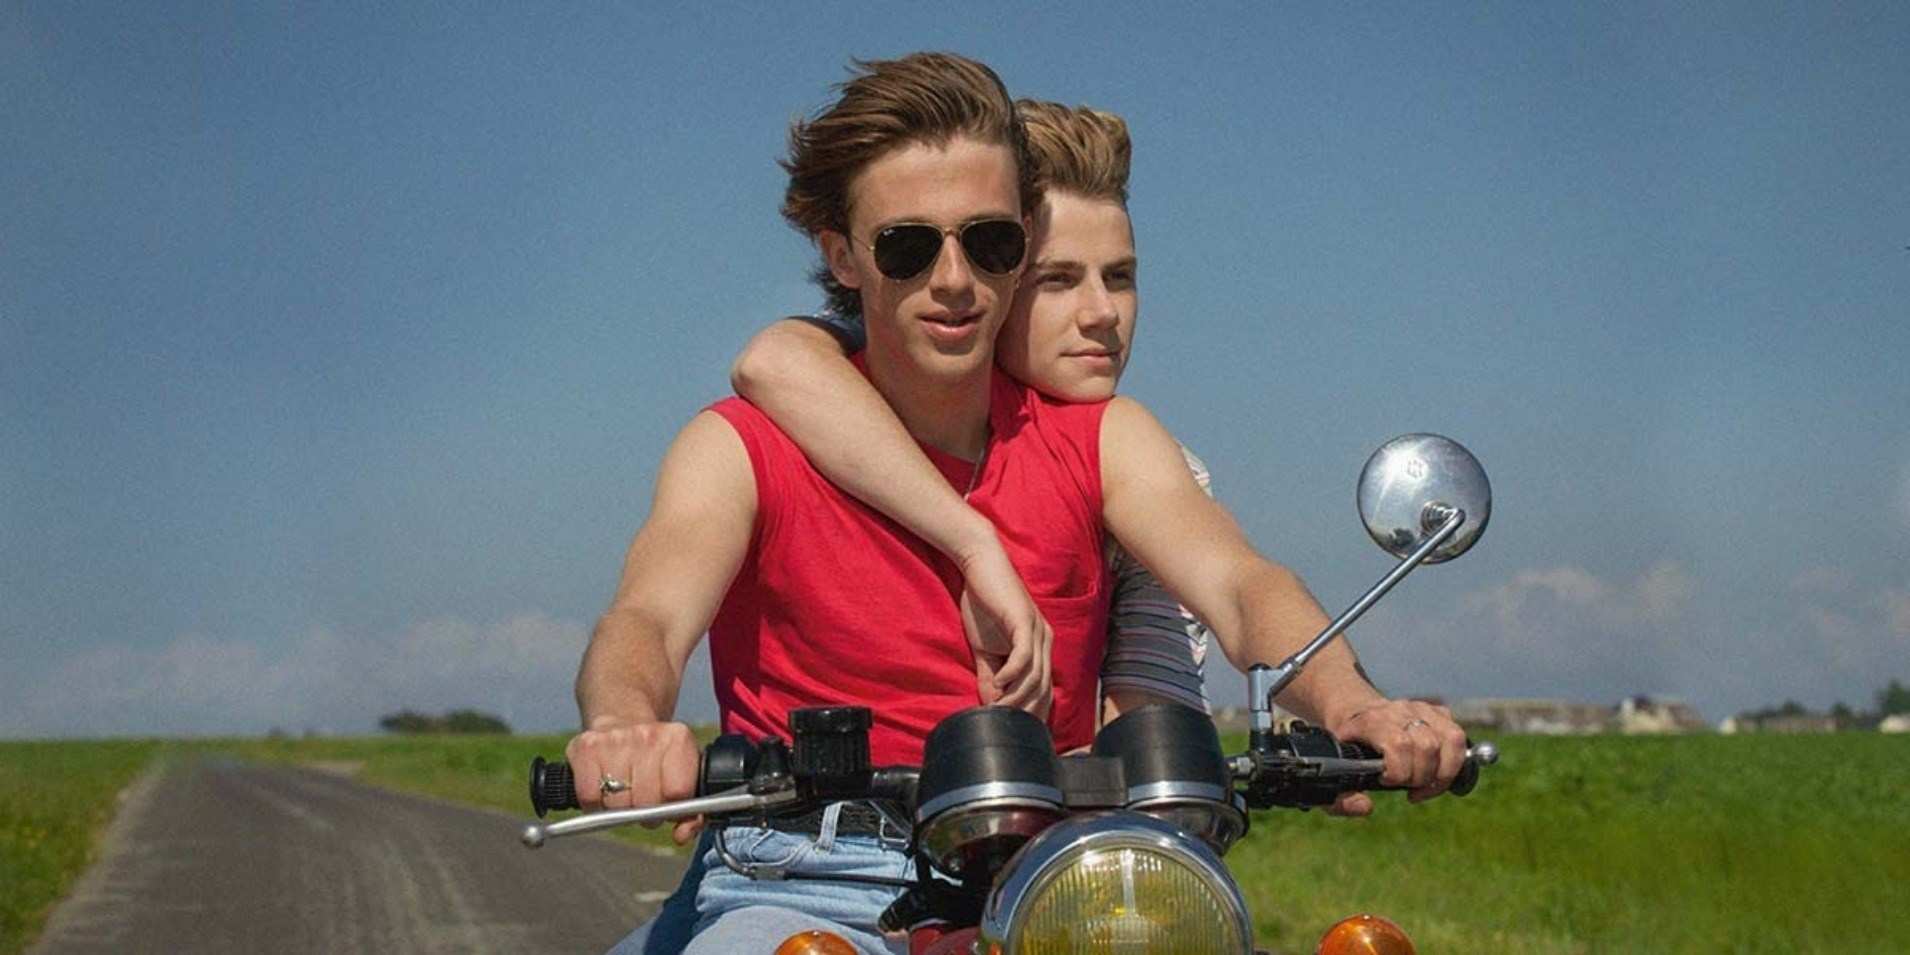 David and Alex on a motorbike